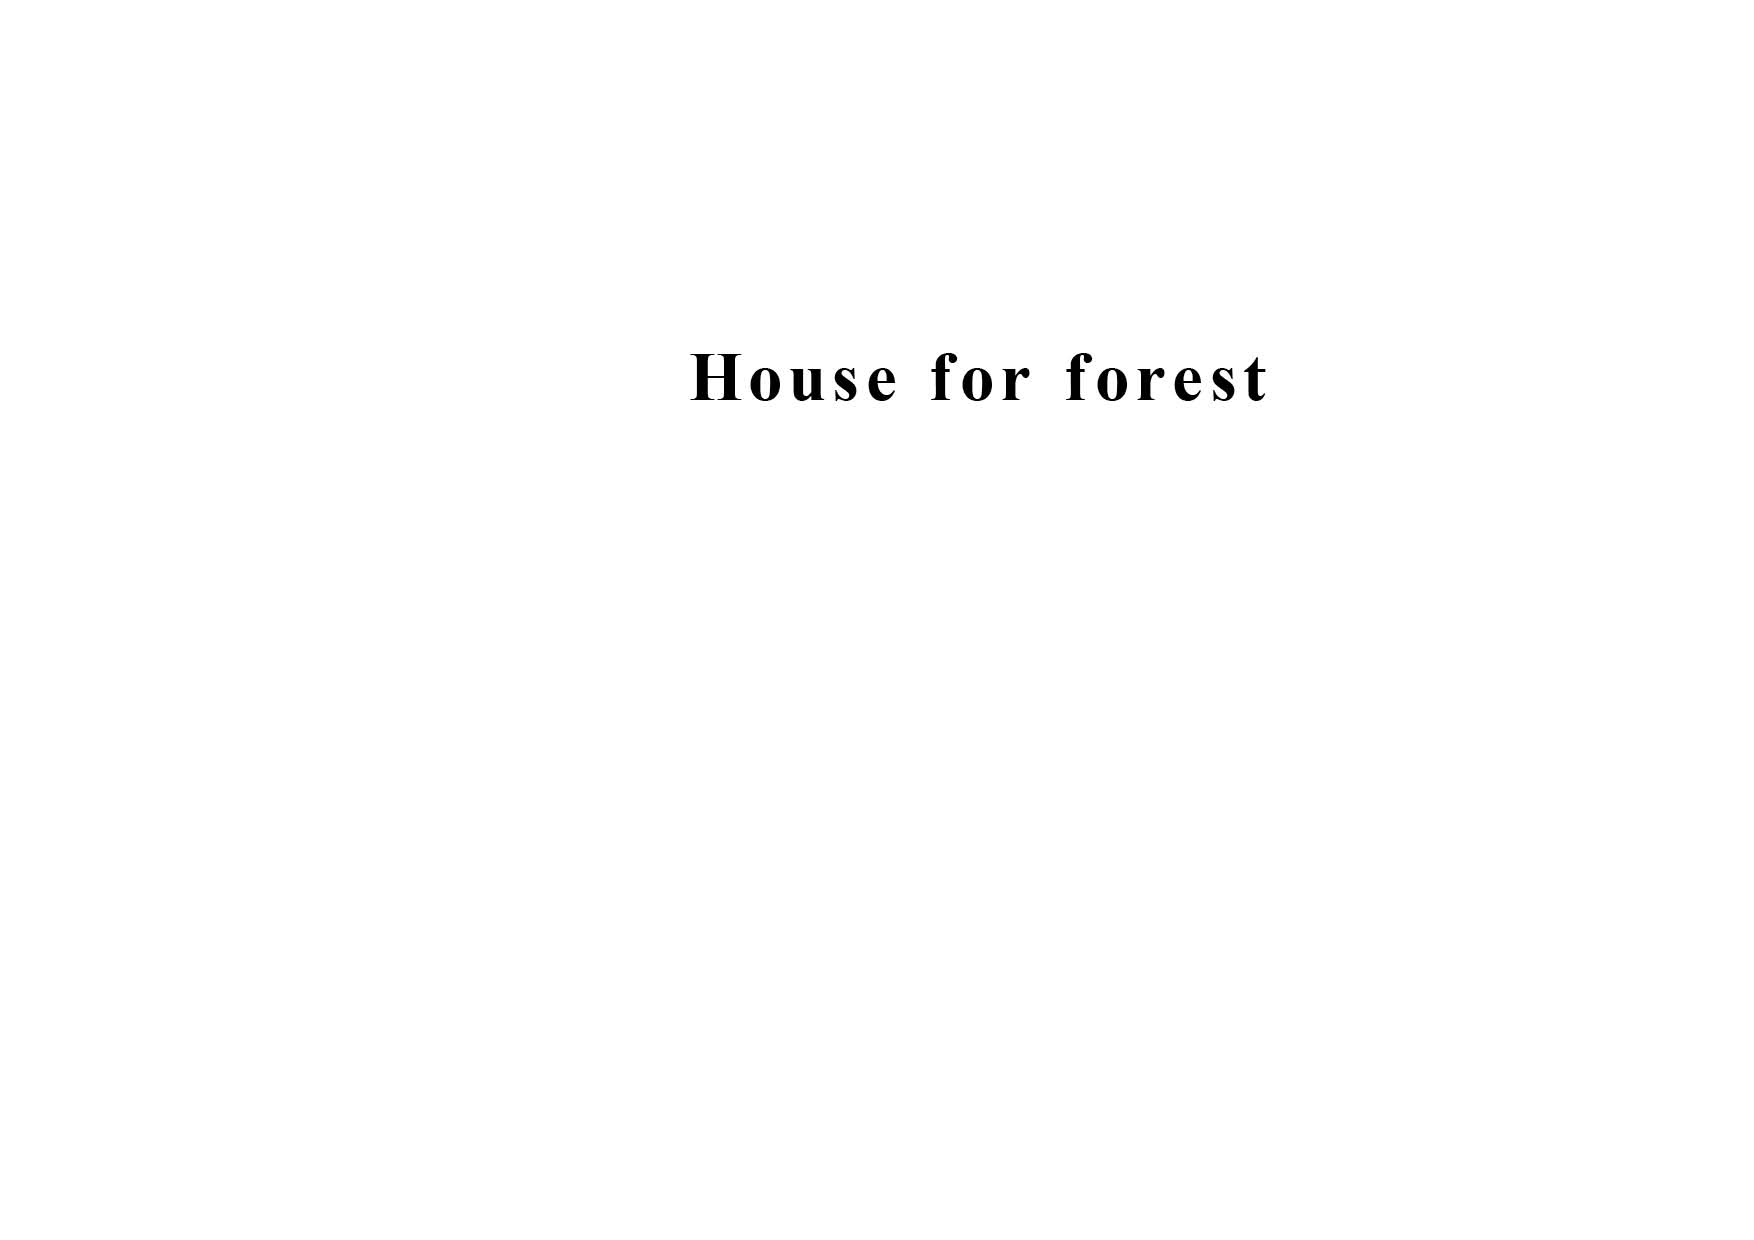 AFTERPOSTOFFICEのhouseforforestという本の画像